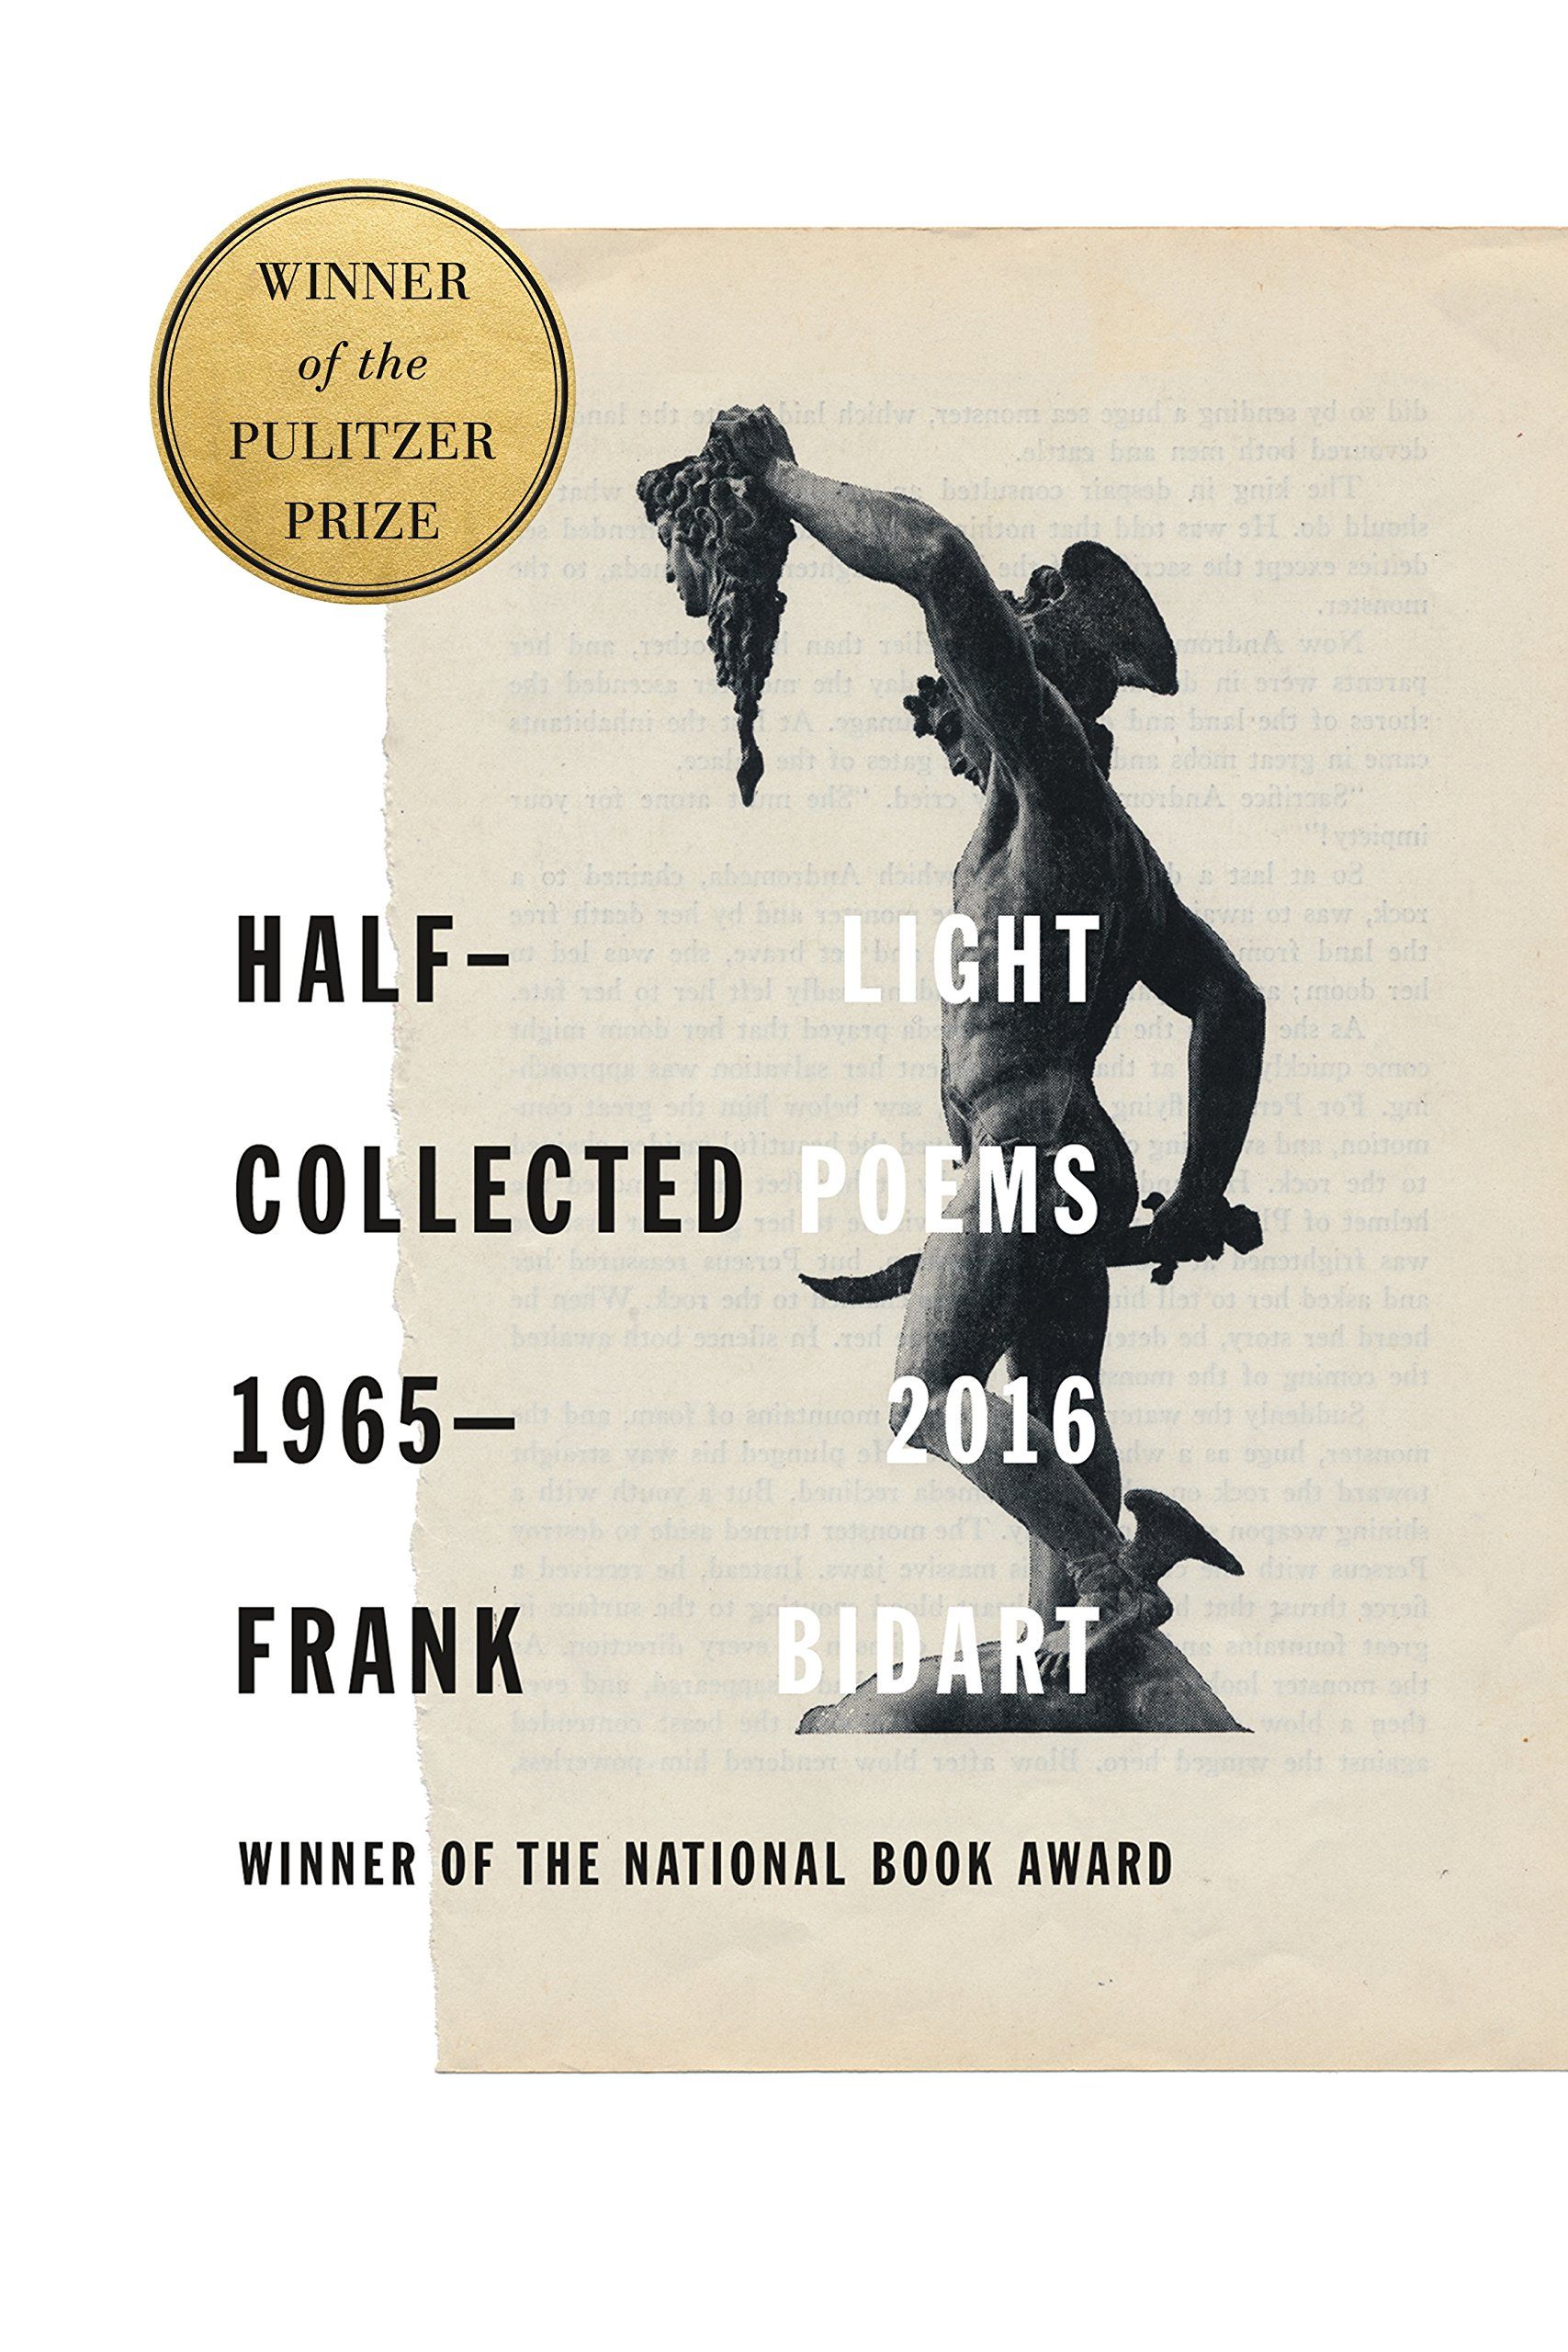 half-light by frank bidart book cover